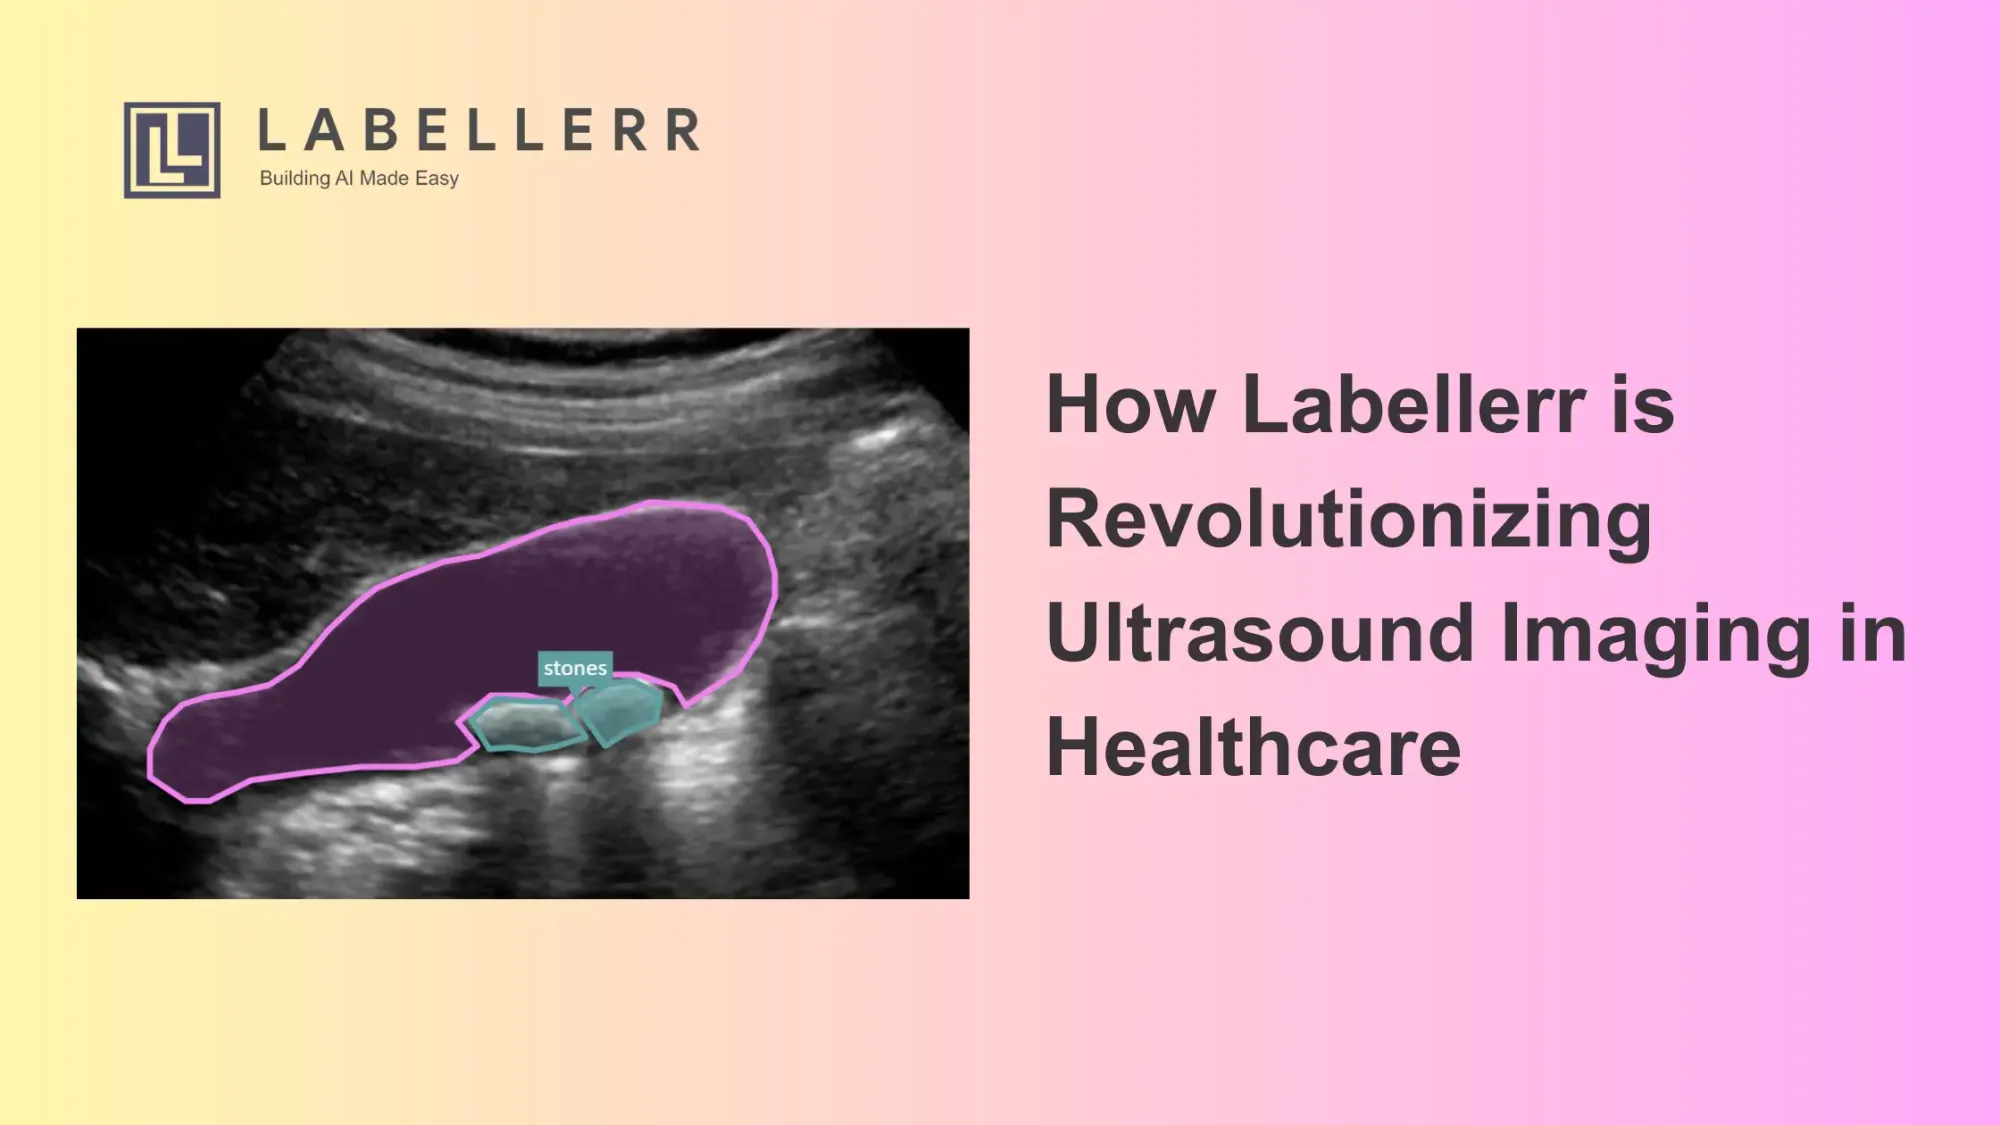 Labellerr is Revolutionizing Ultrasound Imaging in Healthcare